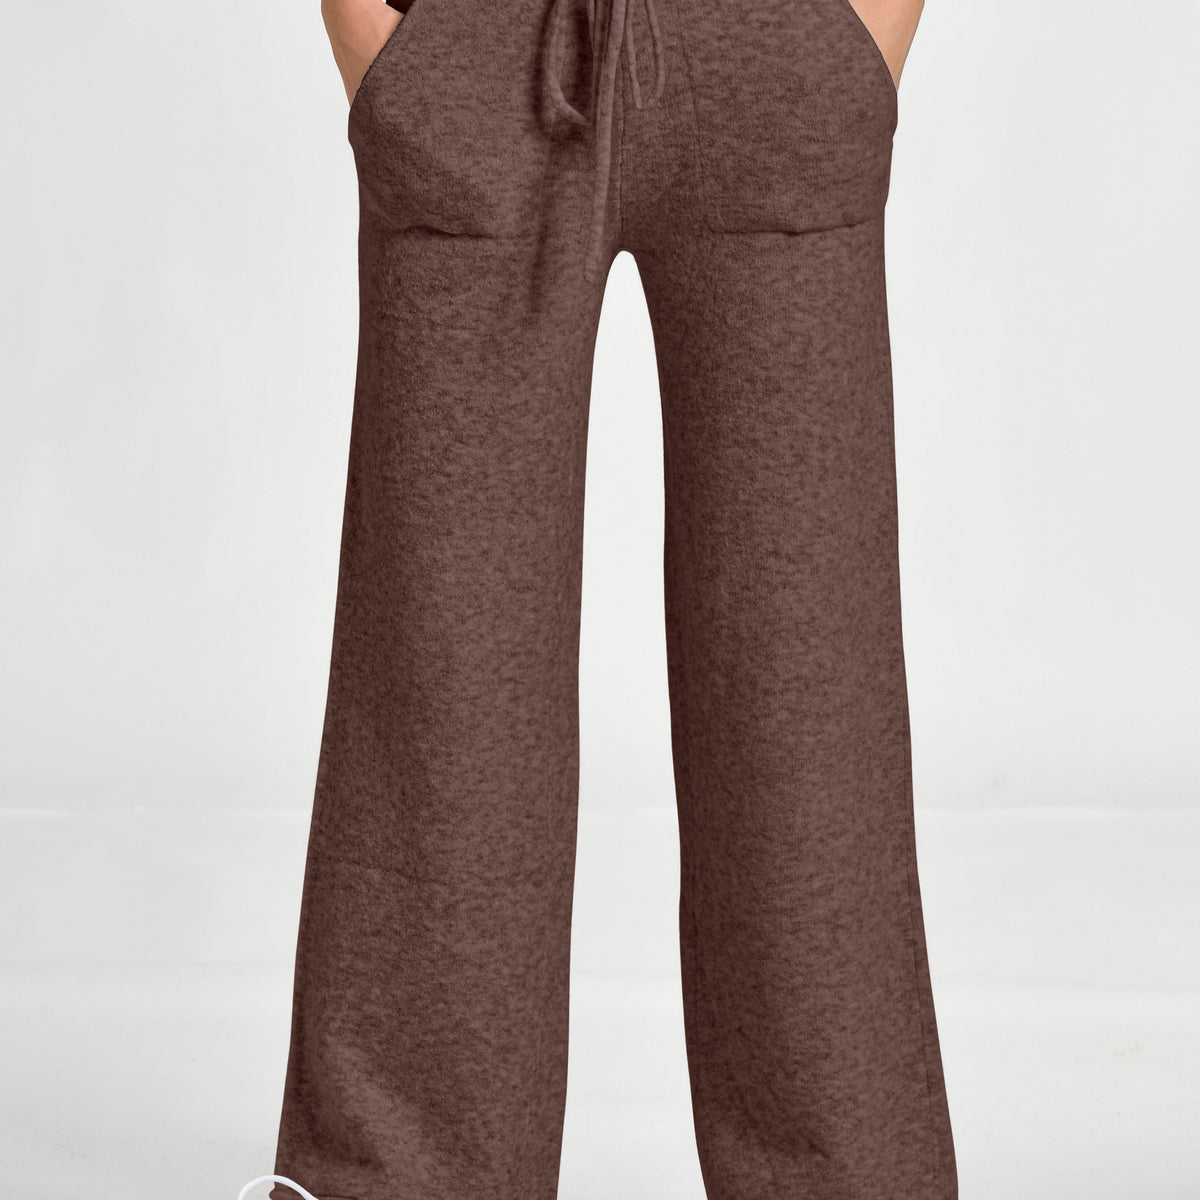 Women's knitted brown pants - Deha